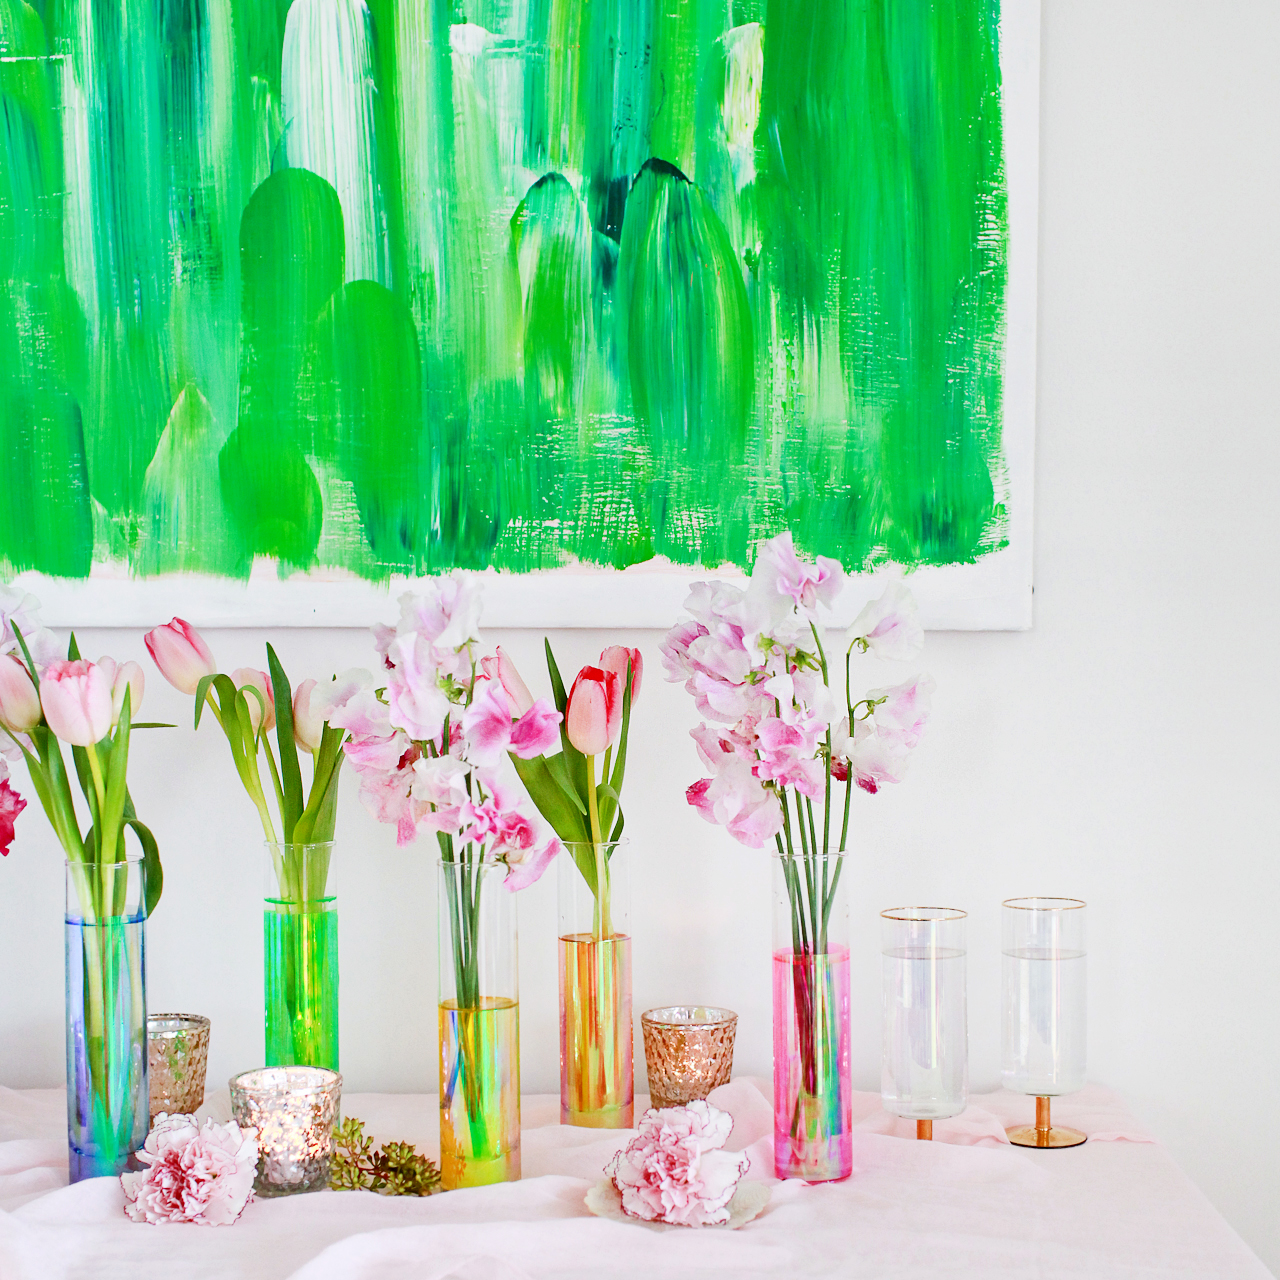 DIY Iridescent Rainbow Vases